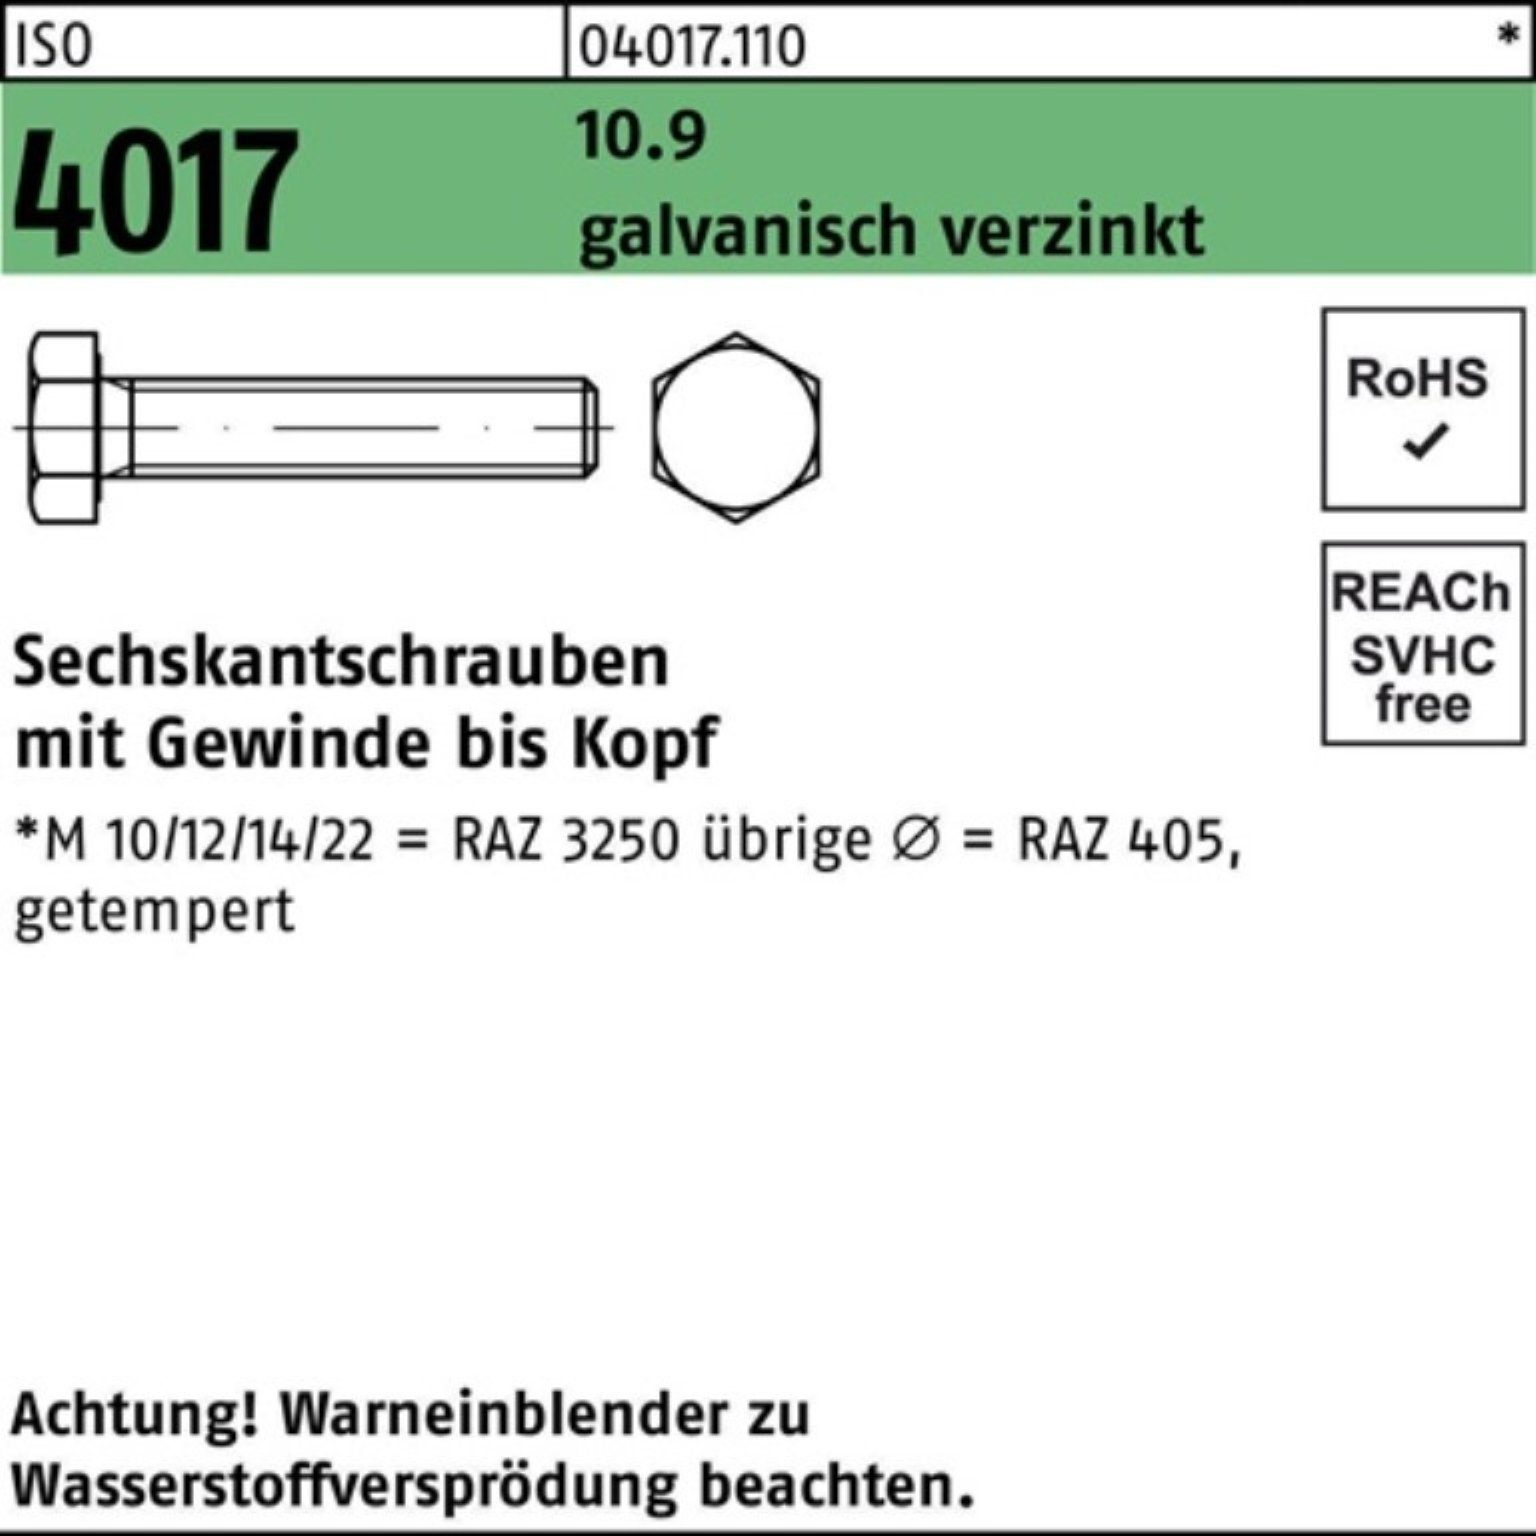 Bufab Sechskantschraube 100er 35 Pack S 4017 10.9 galv.verz. Sechskantschraube VG M12x ISO 100